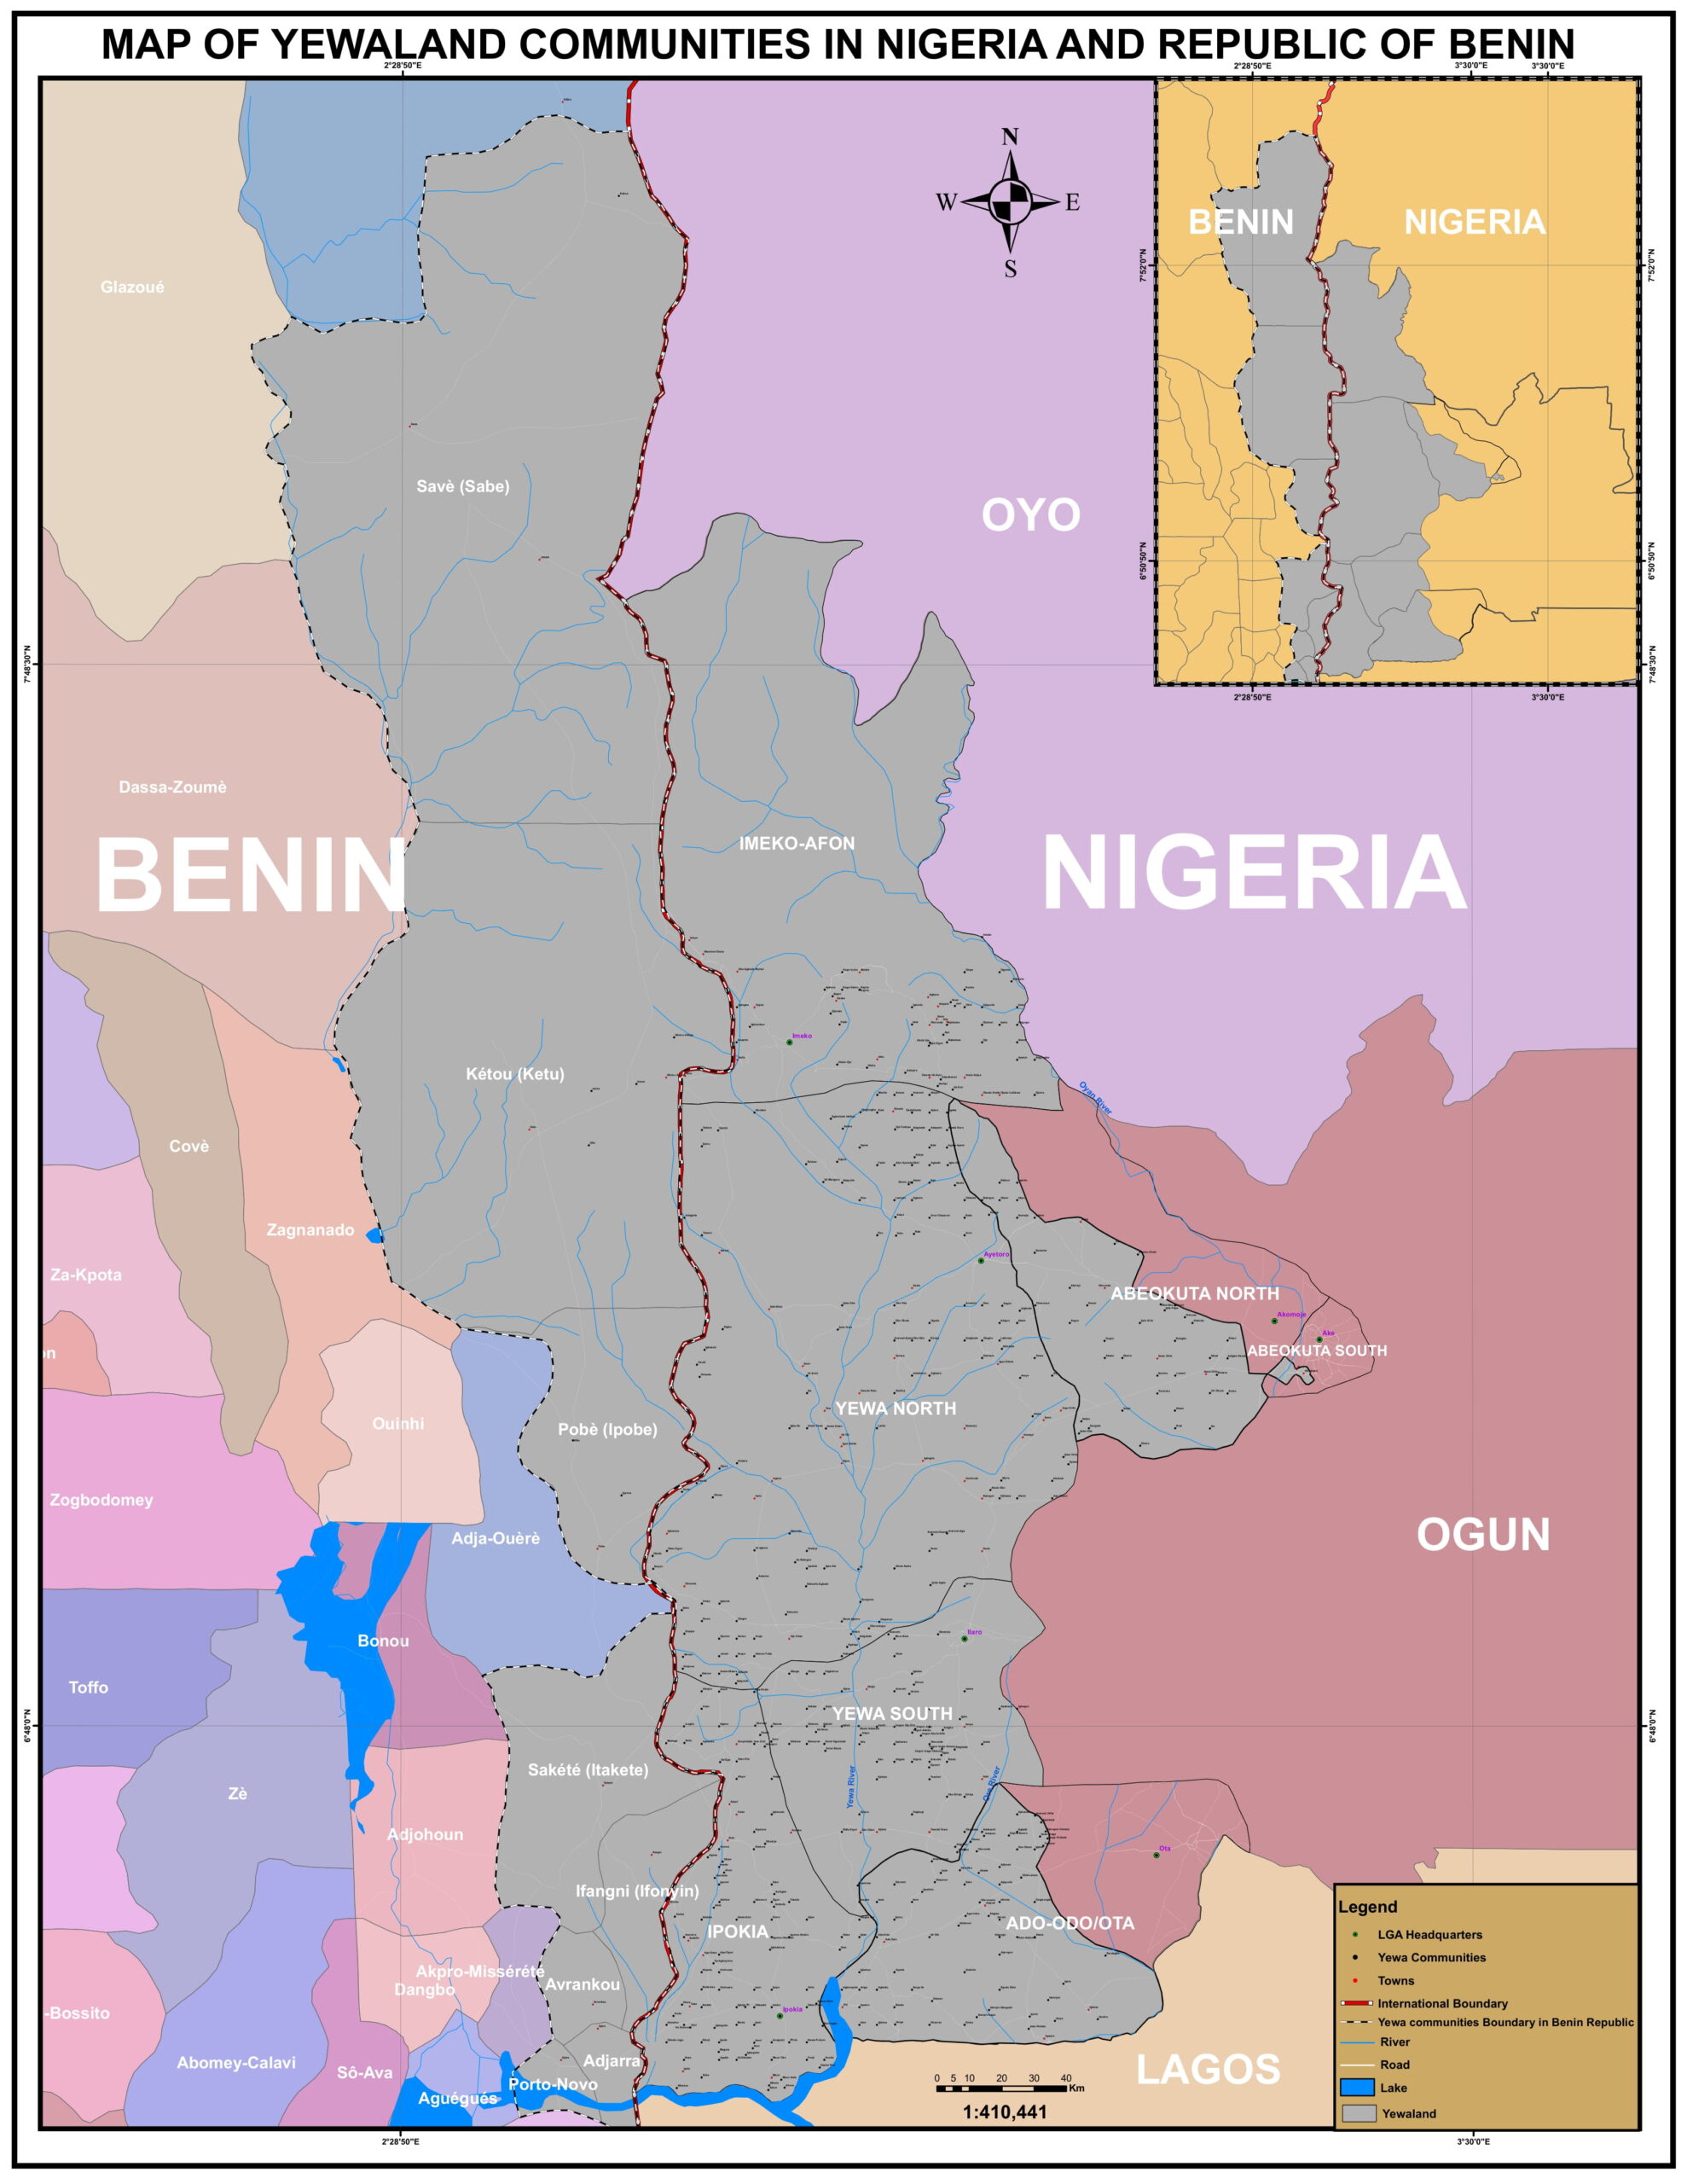 YEWALAND Benin and Nigeria map